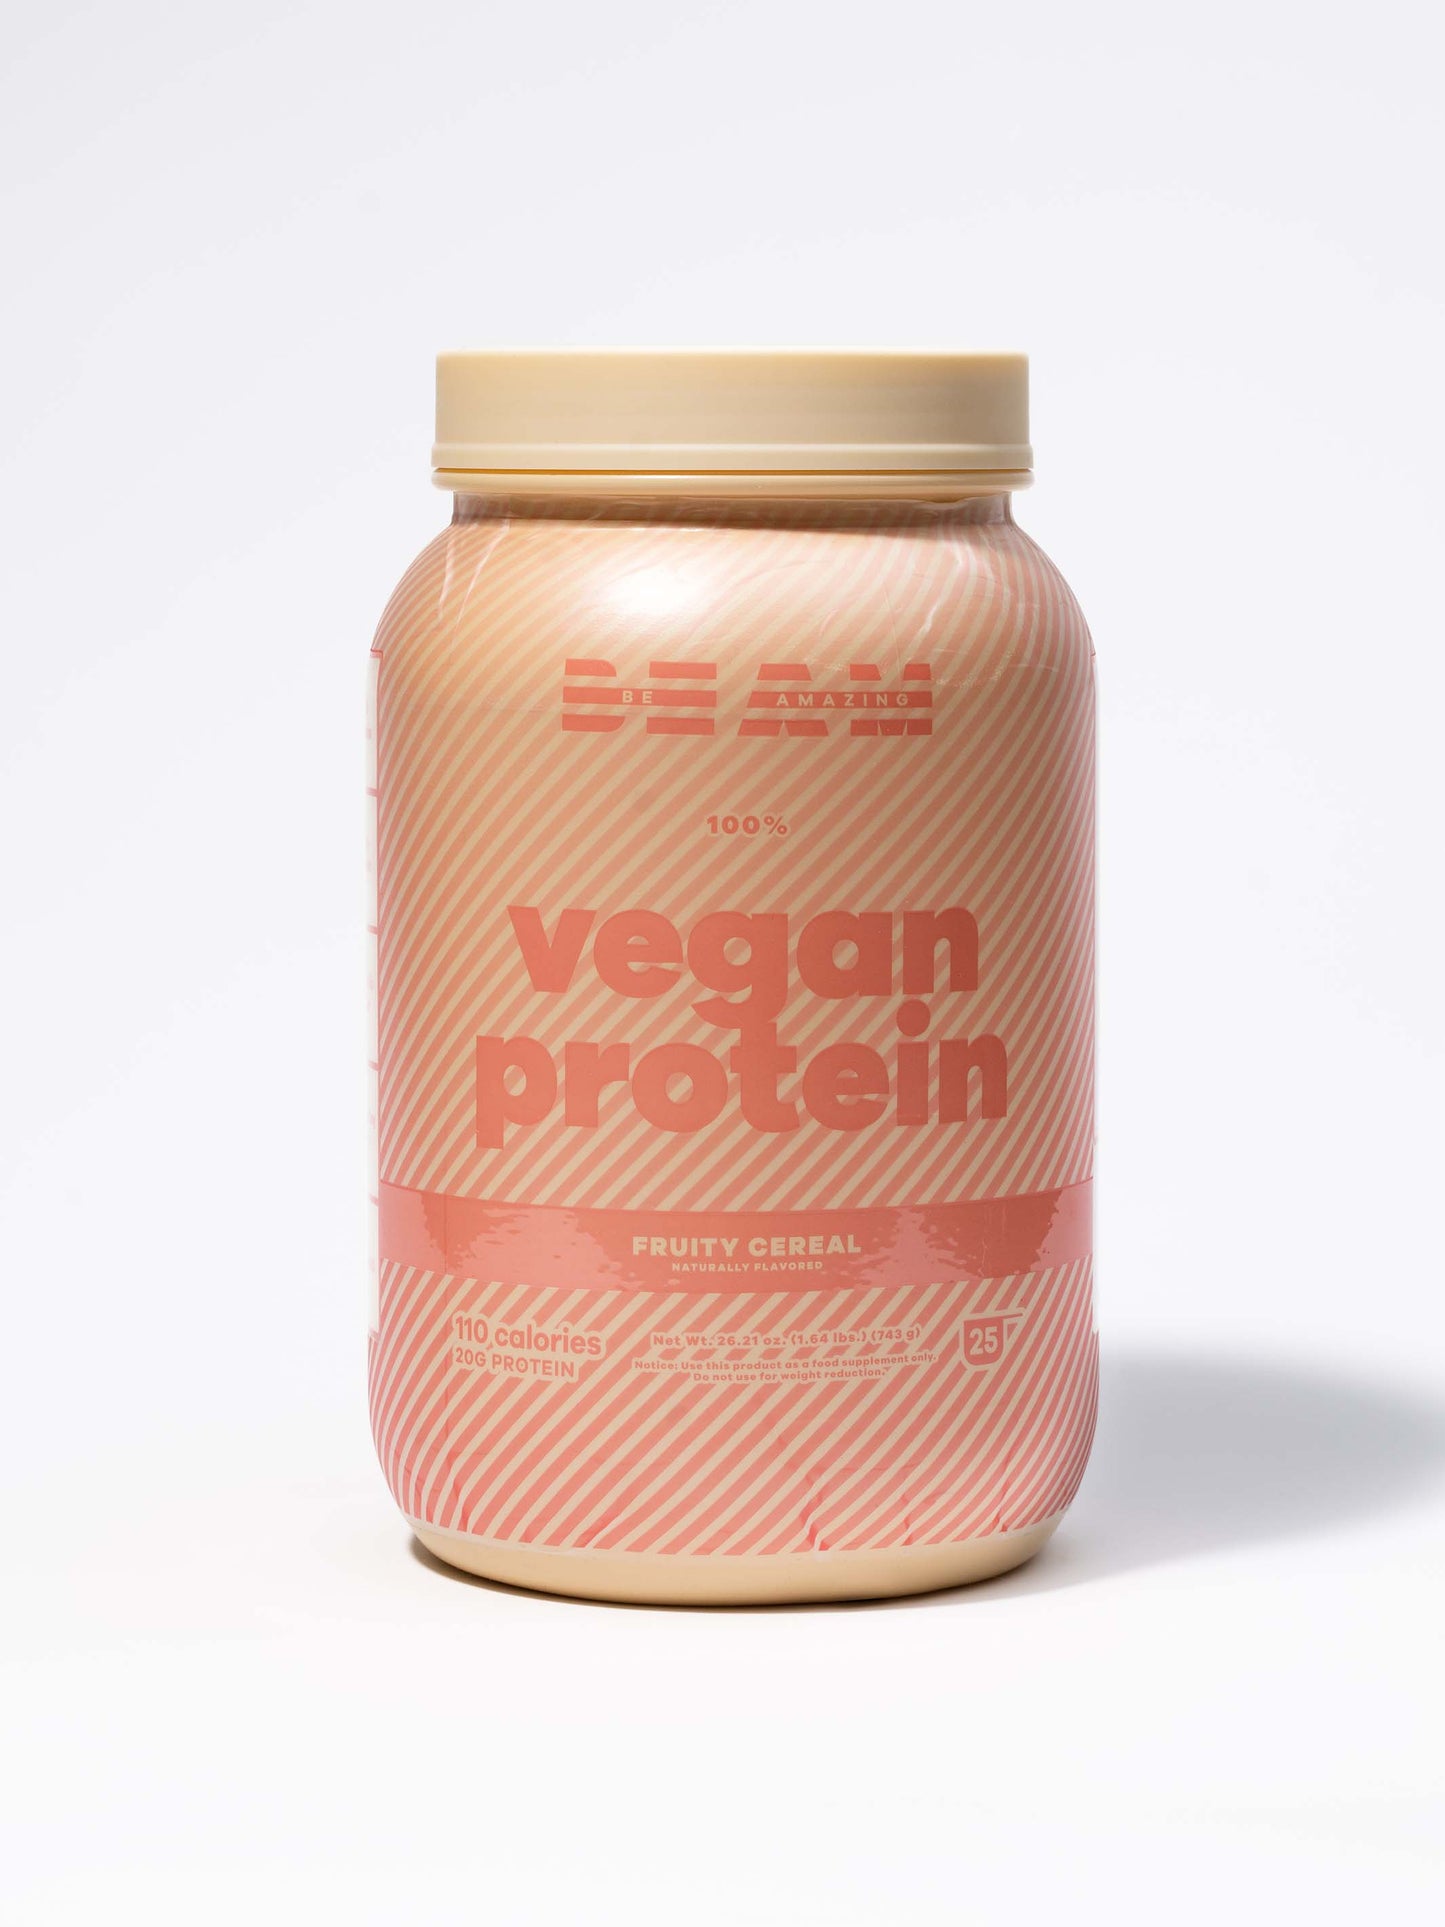 vegan protein